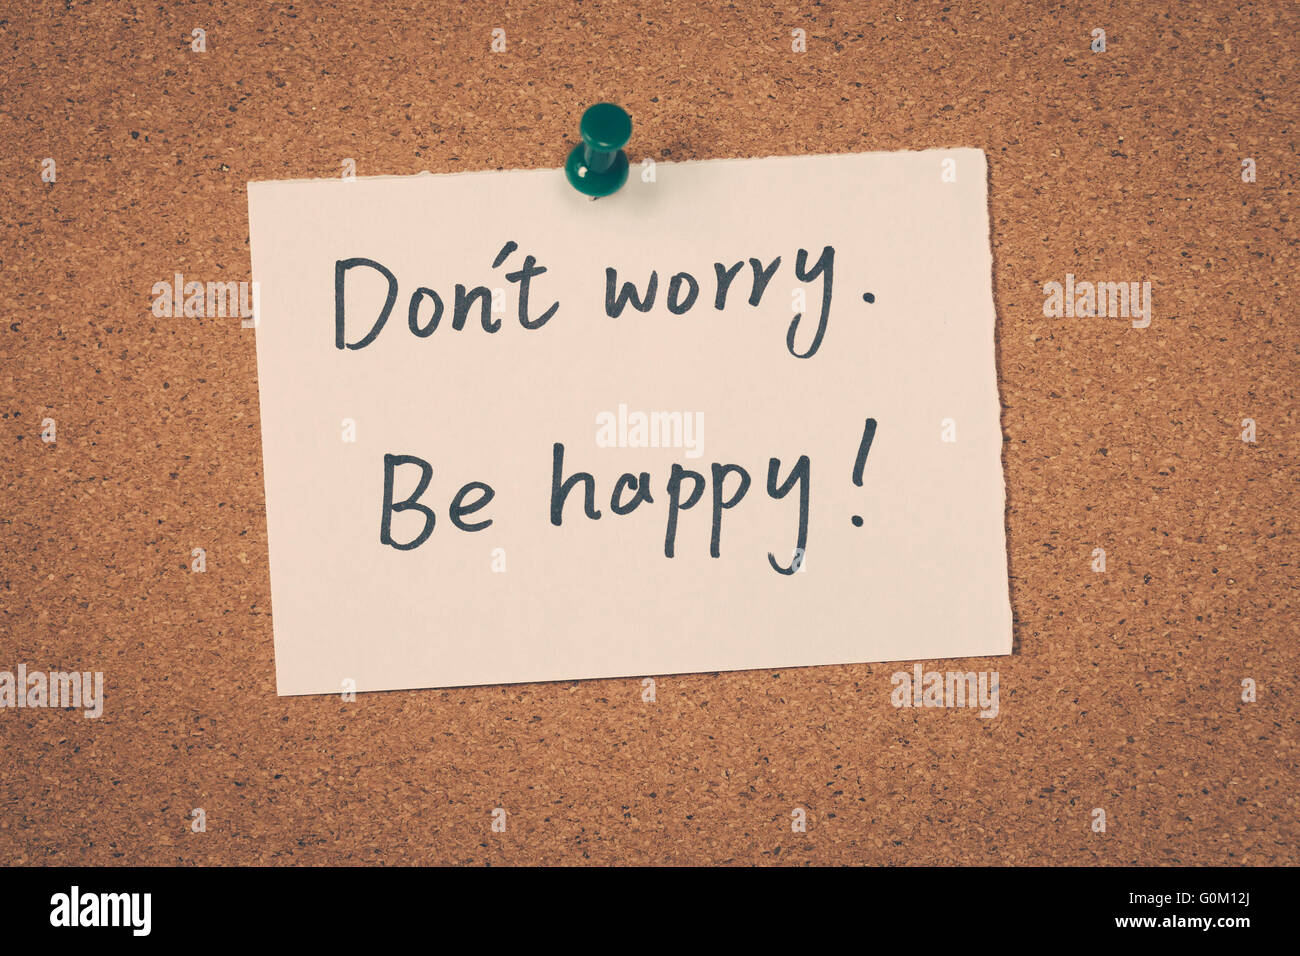 Don't worry. Be happy! Stock Photo